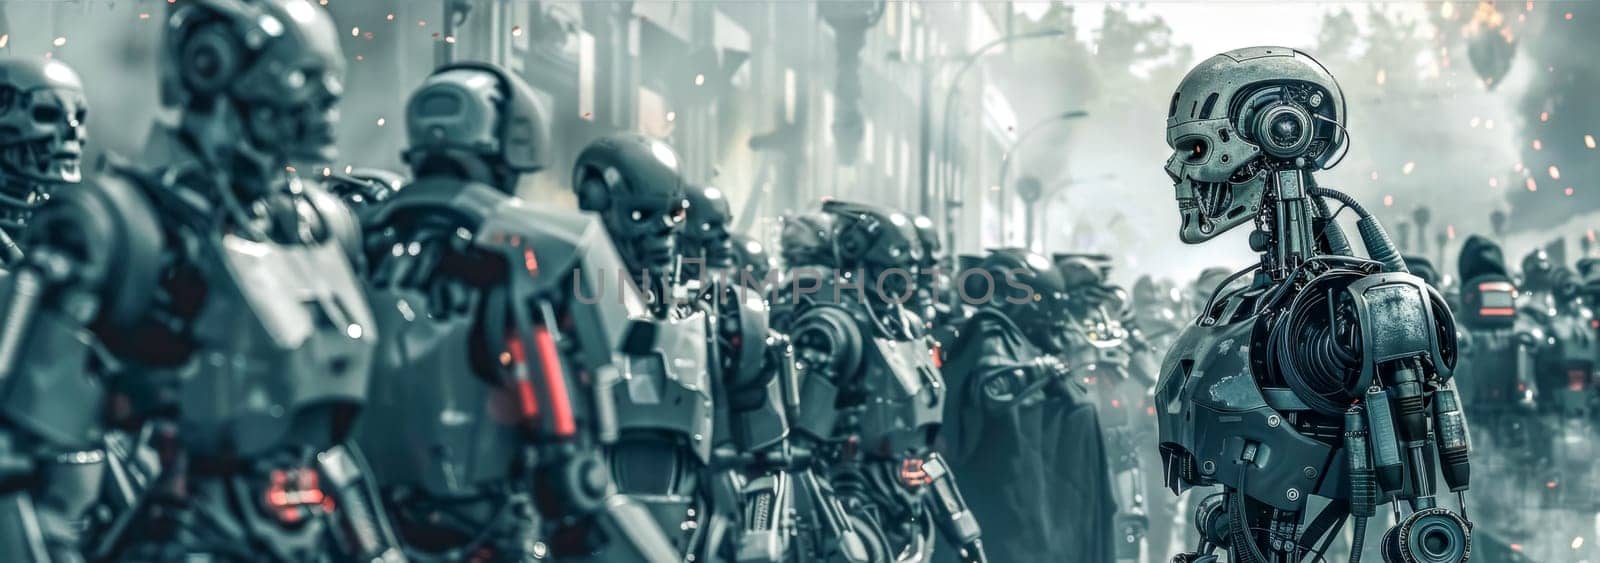 Digital artwork of a robot uprising, with menacing androids among atmospheric urban chaos